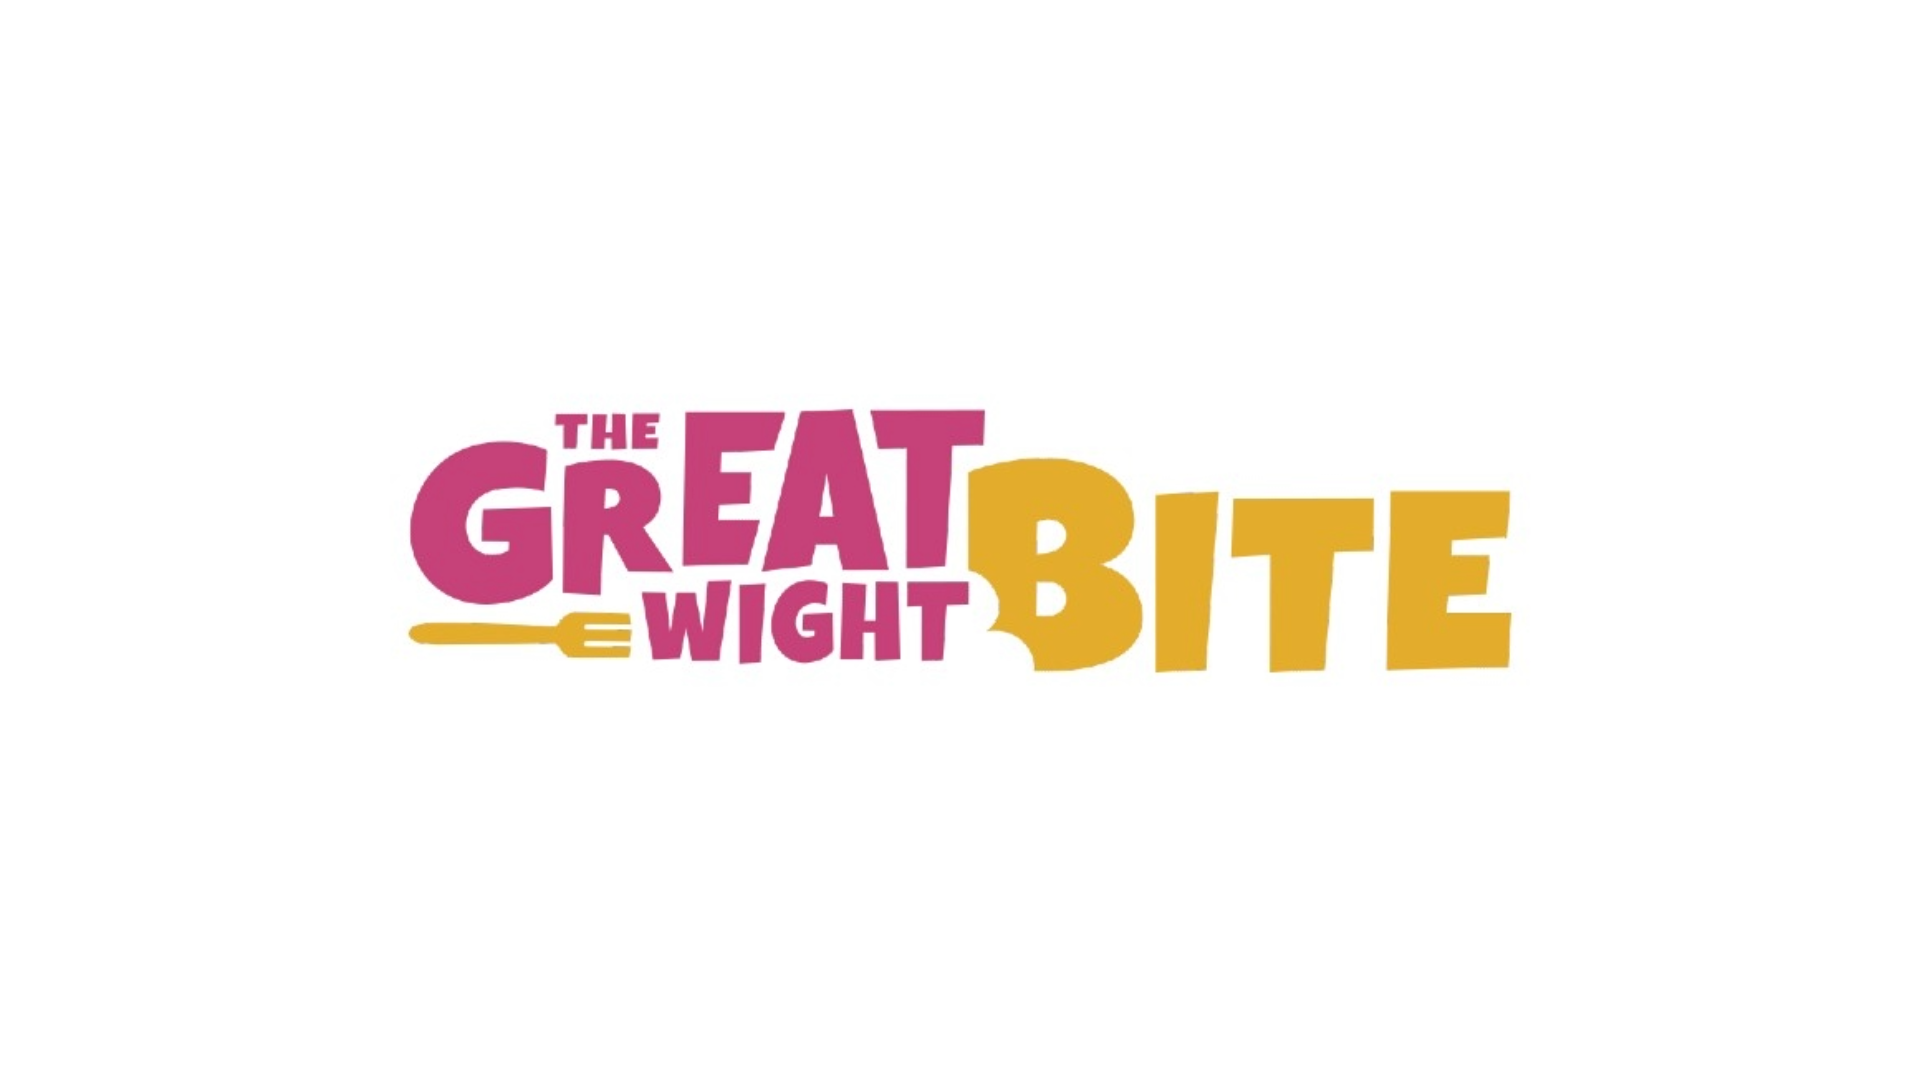 great wight bite logo